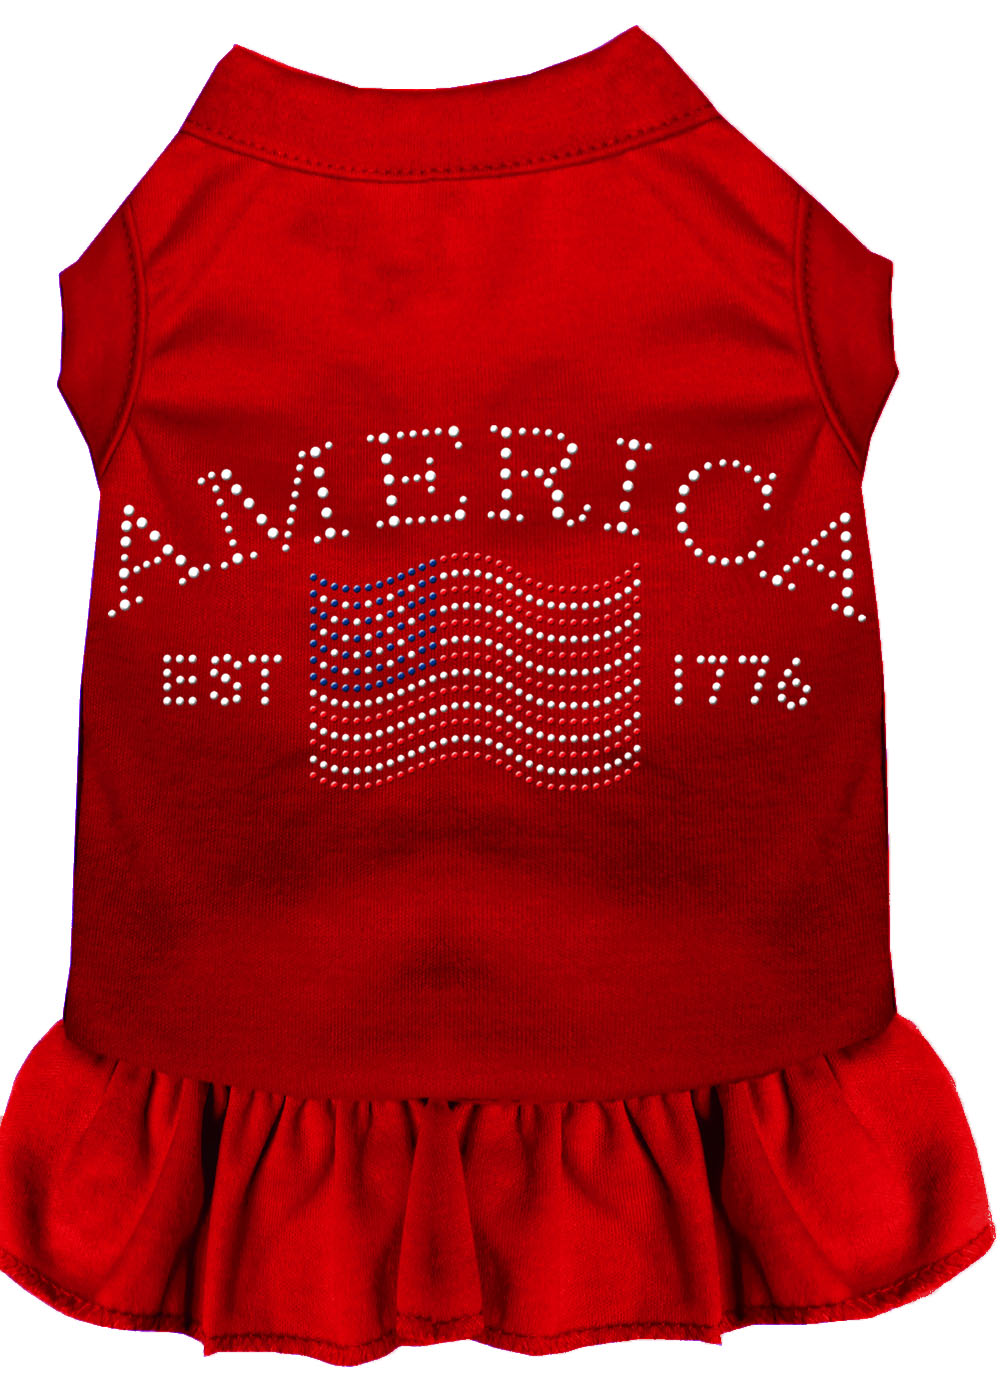 Classic America Rhinestone Dress Red Sm